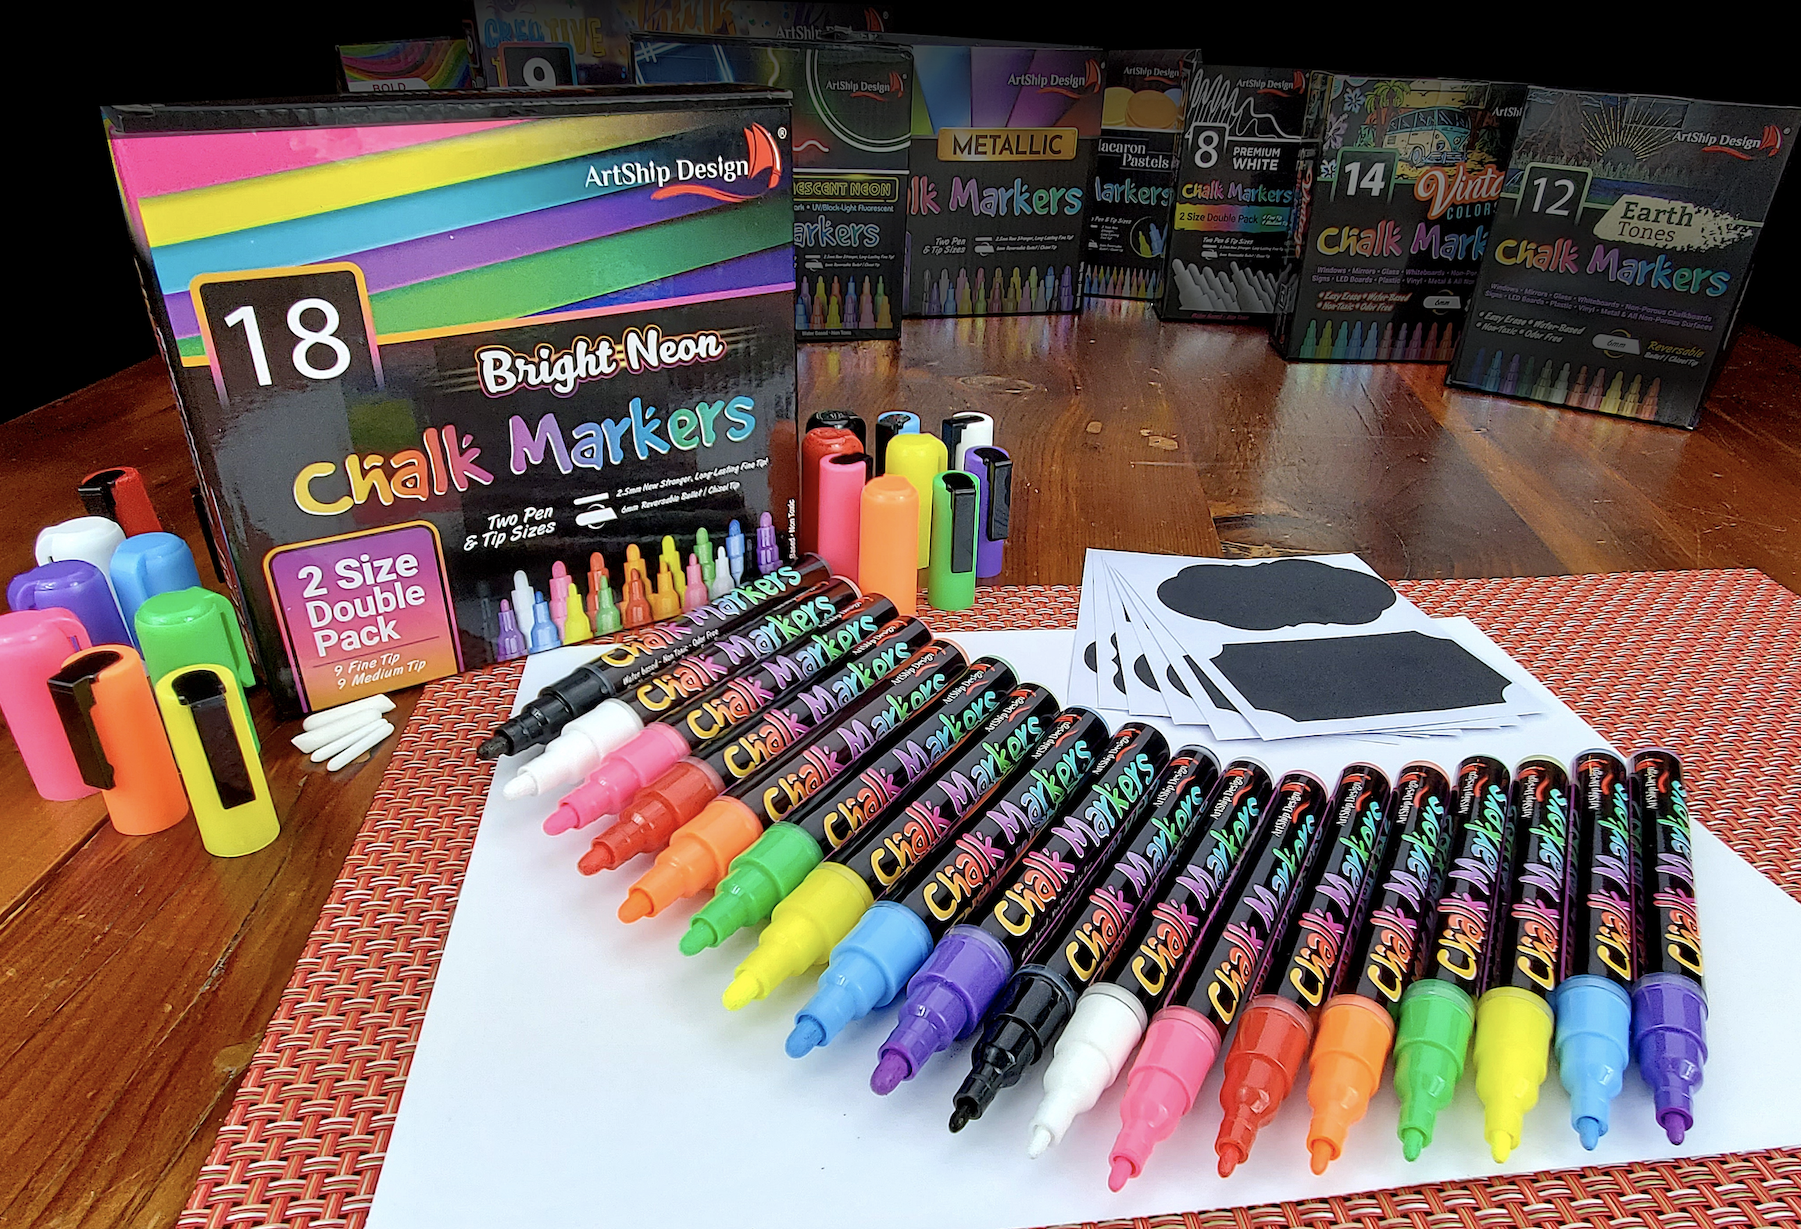 Pastel liquid chalk markers barrel design, Product packaging contest